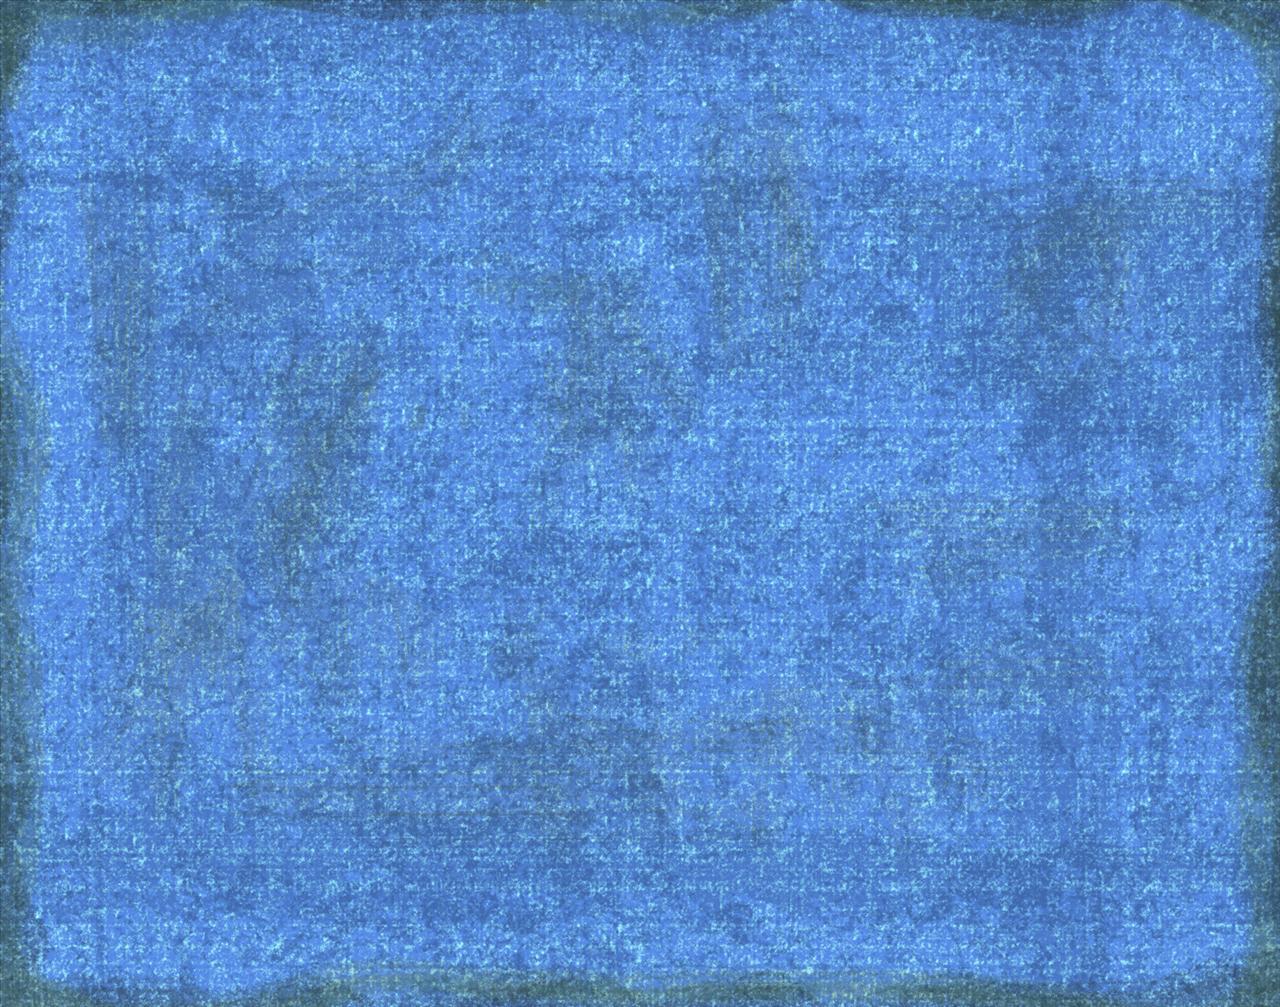 2009 wallpaper light blue background